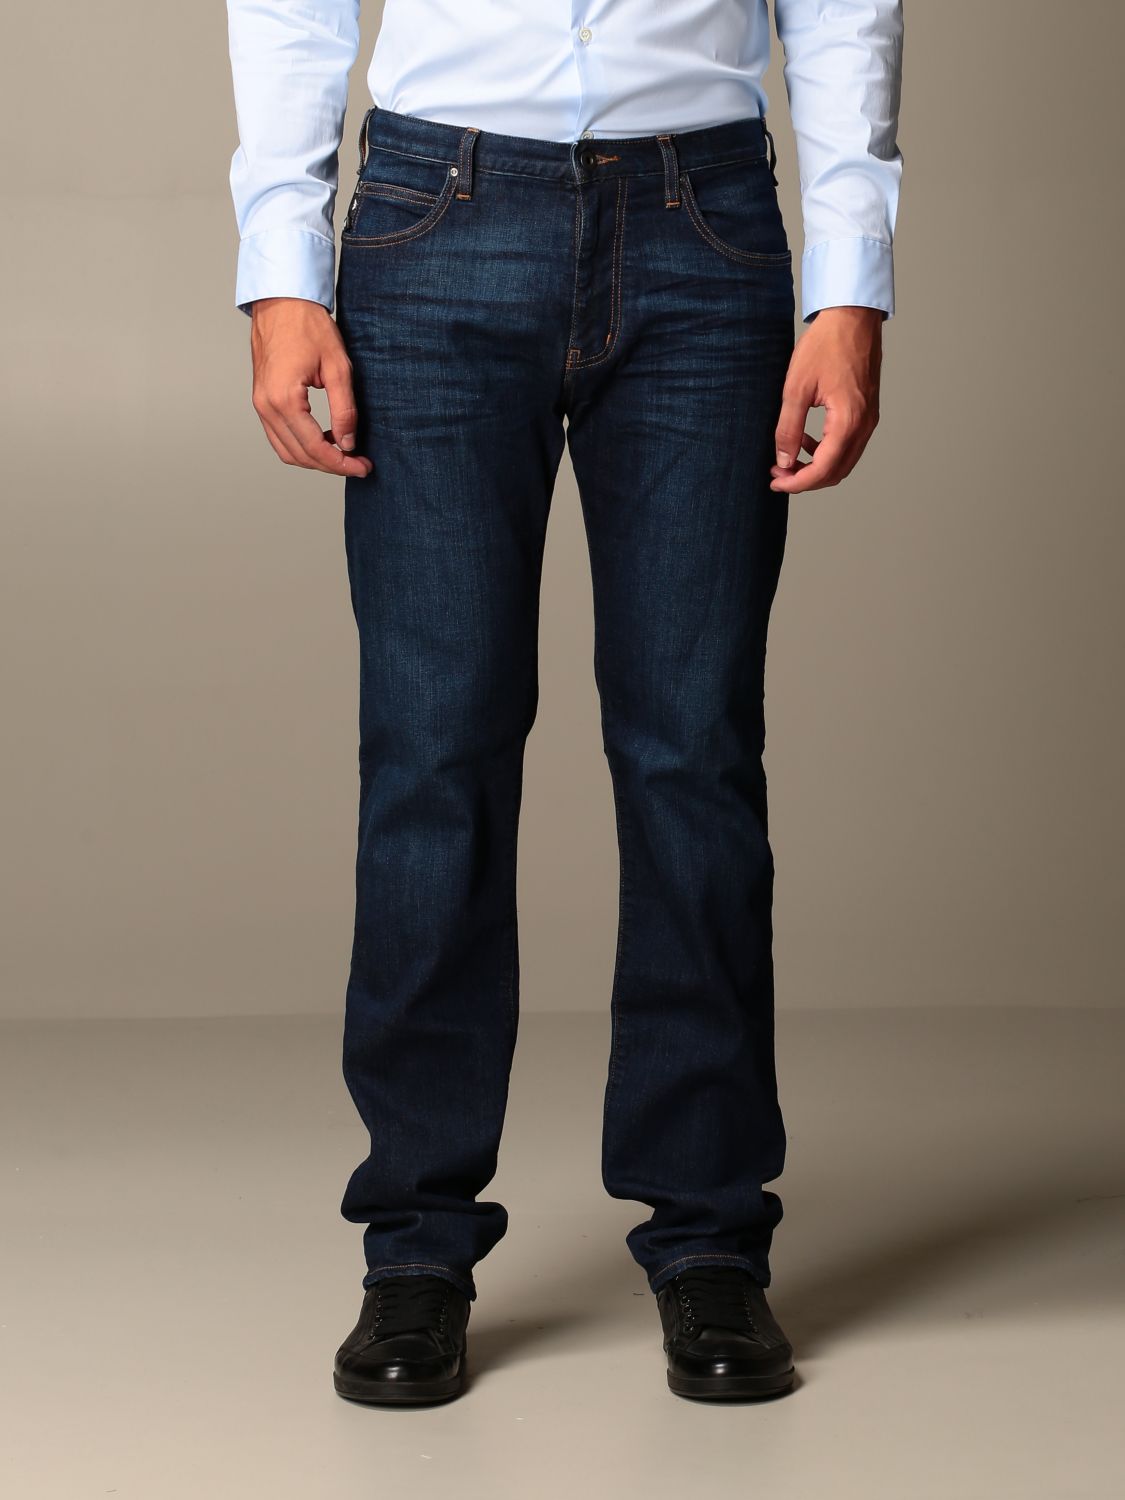 Outlet de Emporio Armani: Jeans hombre, Denim | Jeans Emporio Armani 8N1J45 1V0LZ en línea GIGLIO.COM